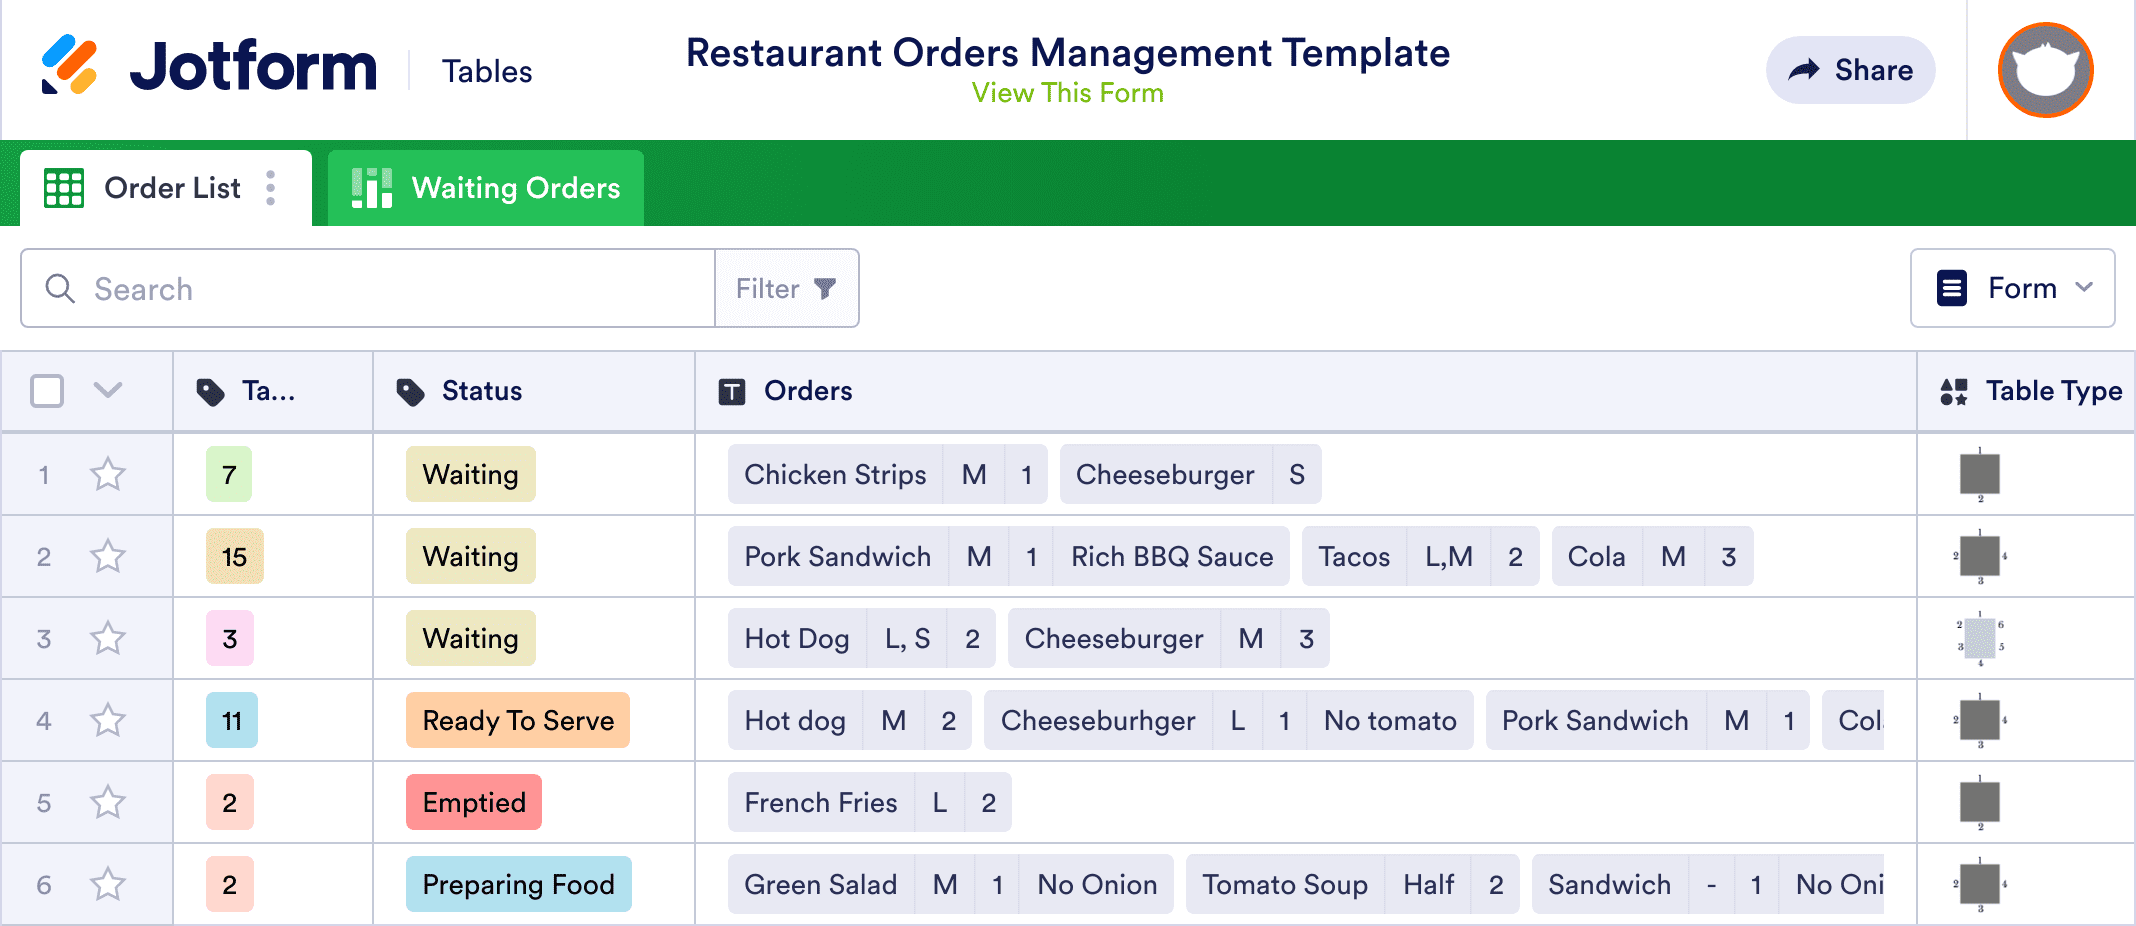 Restaurant Orders Management Template | Jotform Tables